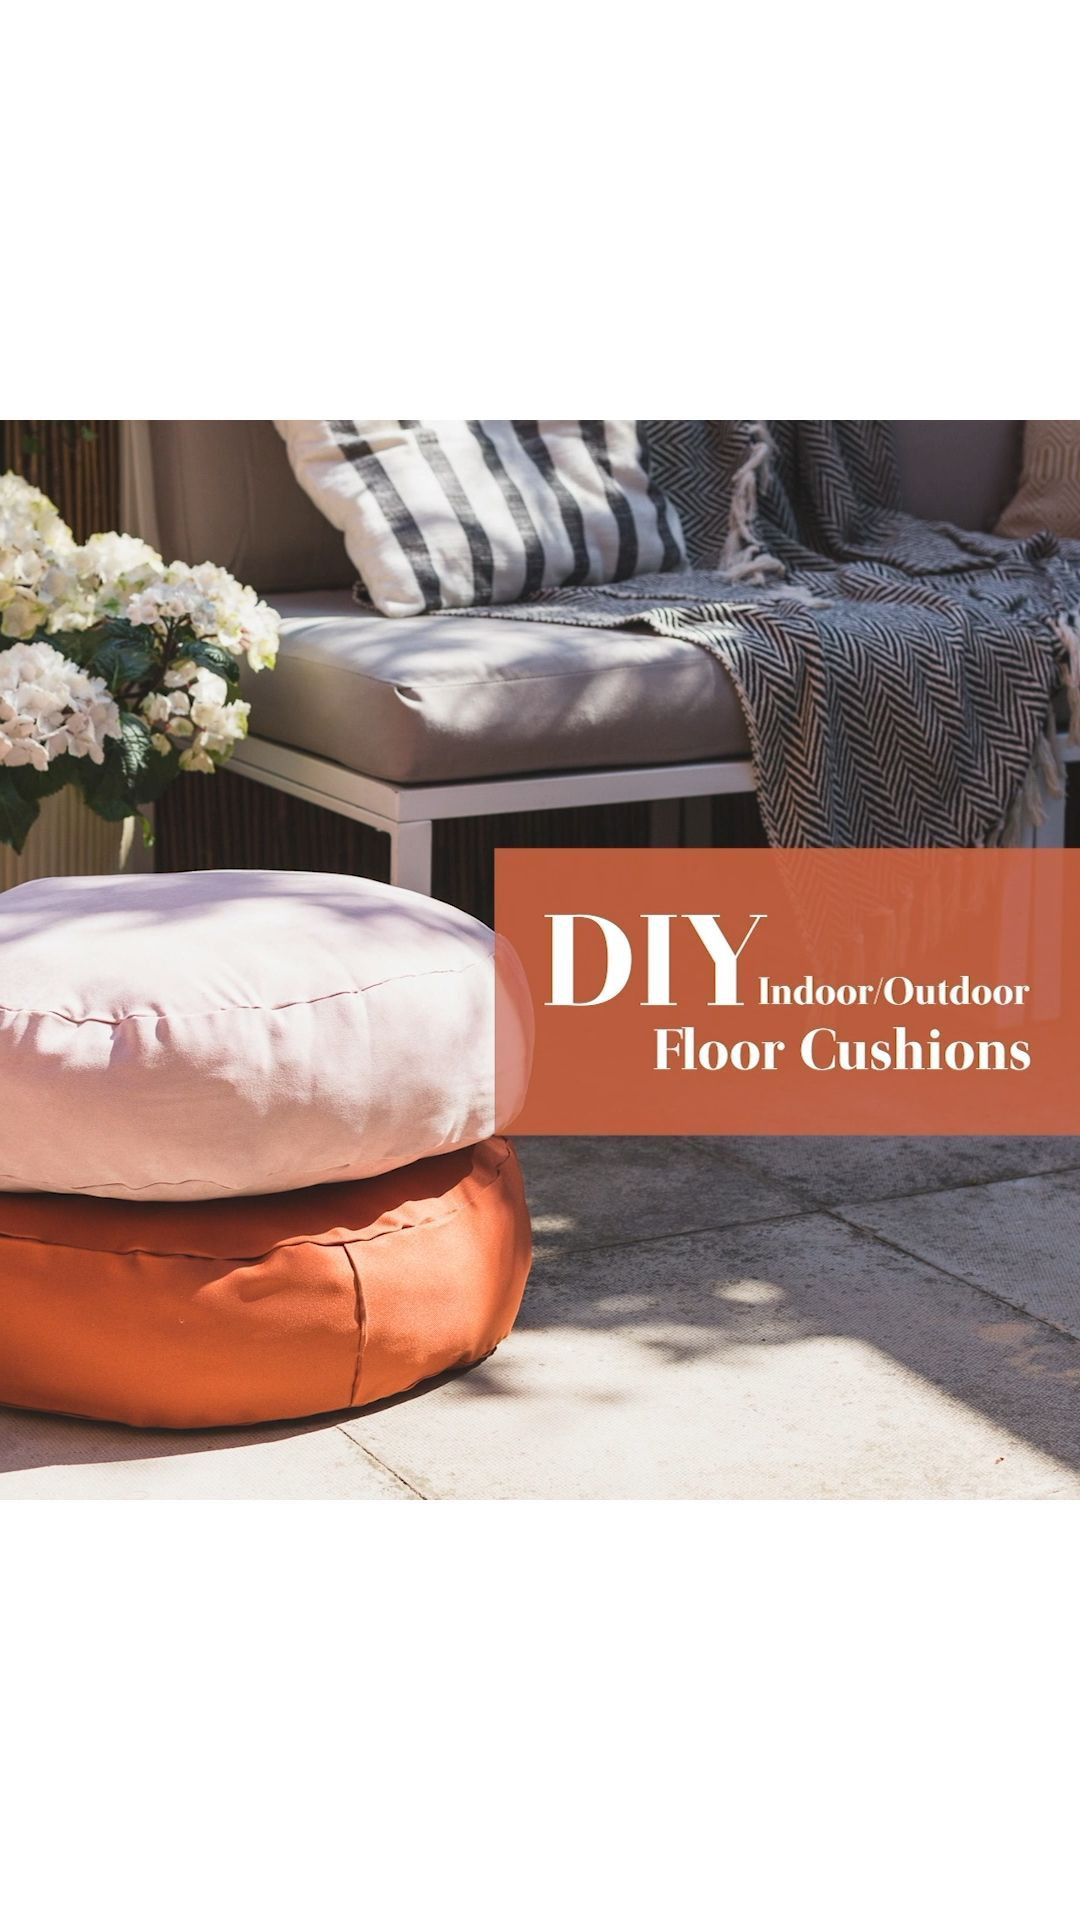 DIY Outdoor Cushions No Sew
 DIY No Sew Indoor Outdoor Floor Cushions in 2020